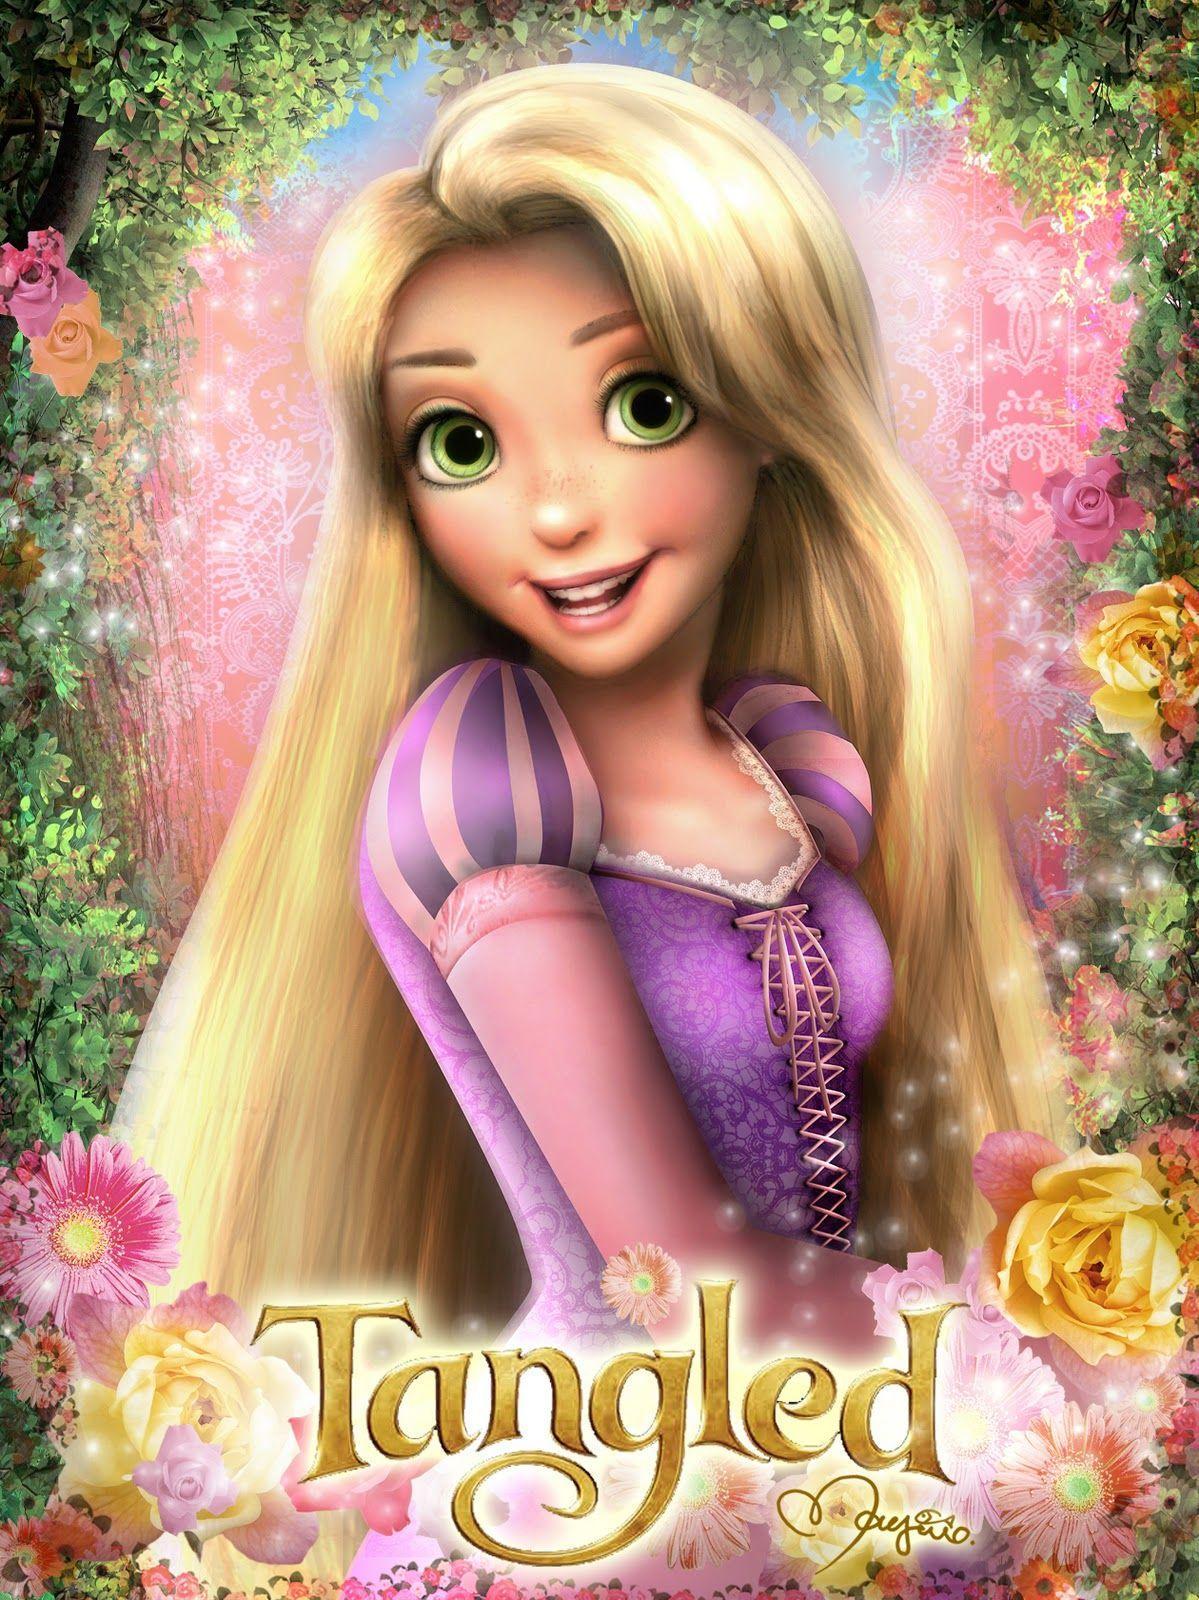 Disney Princess Rapunzel Wallpapers Top Free Disney Princess Rapunzel Backgrounds 